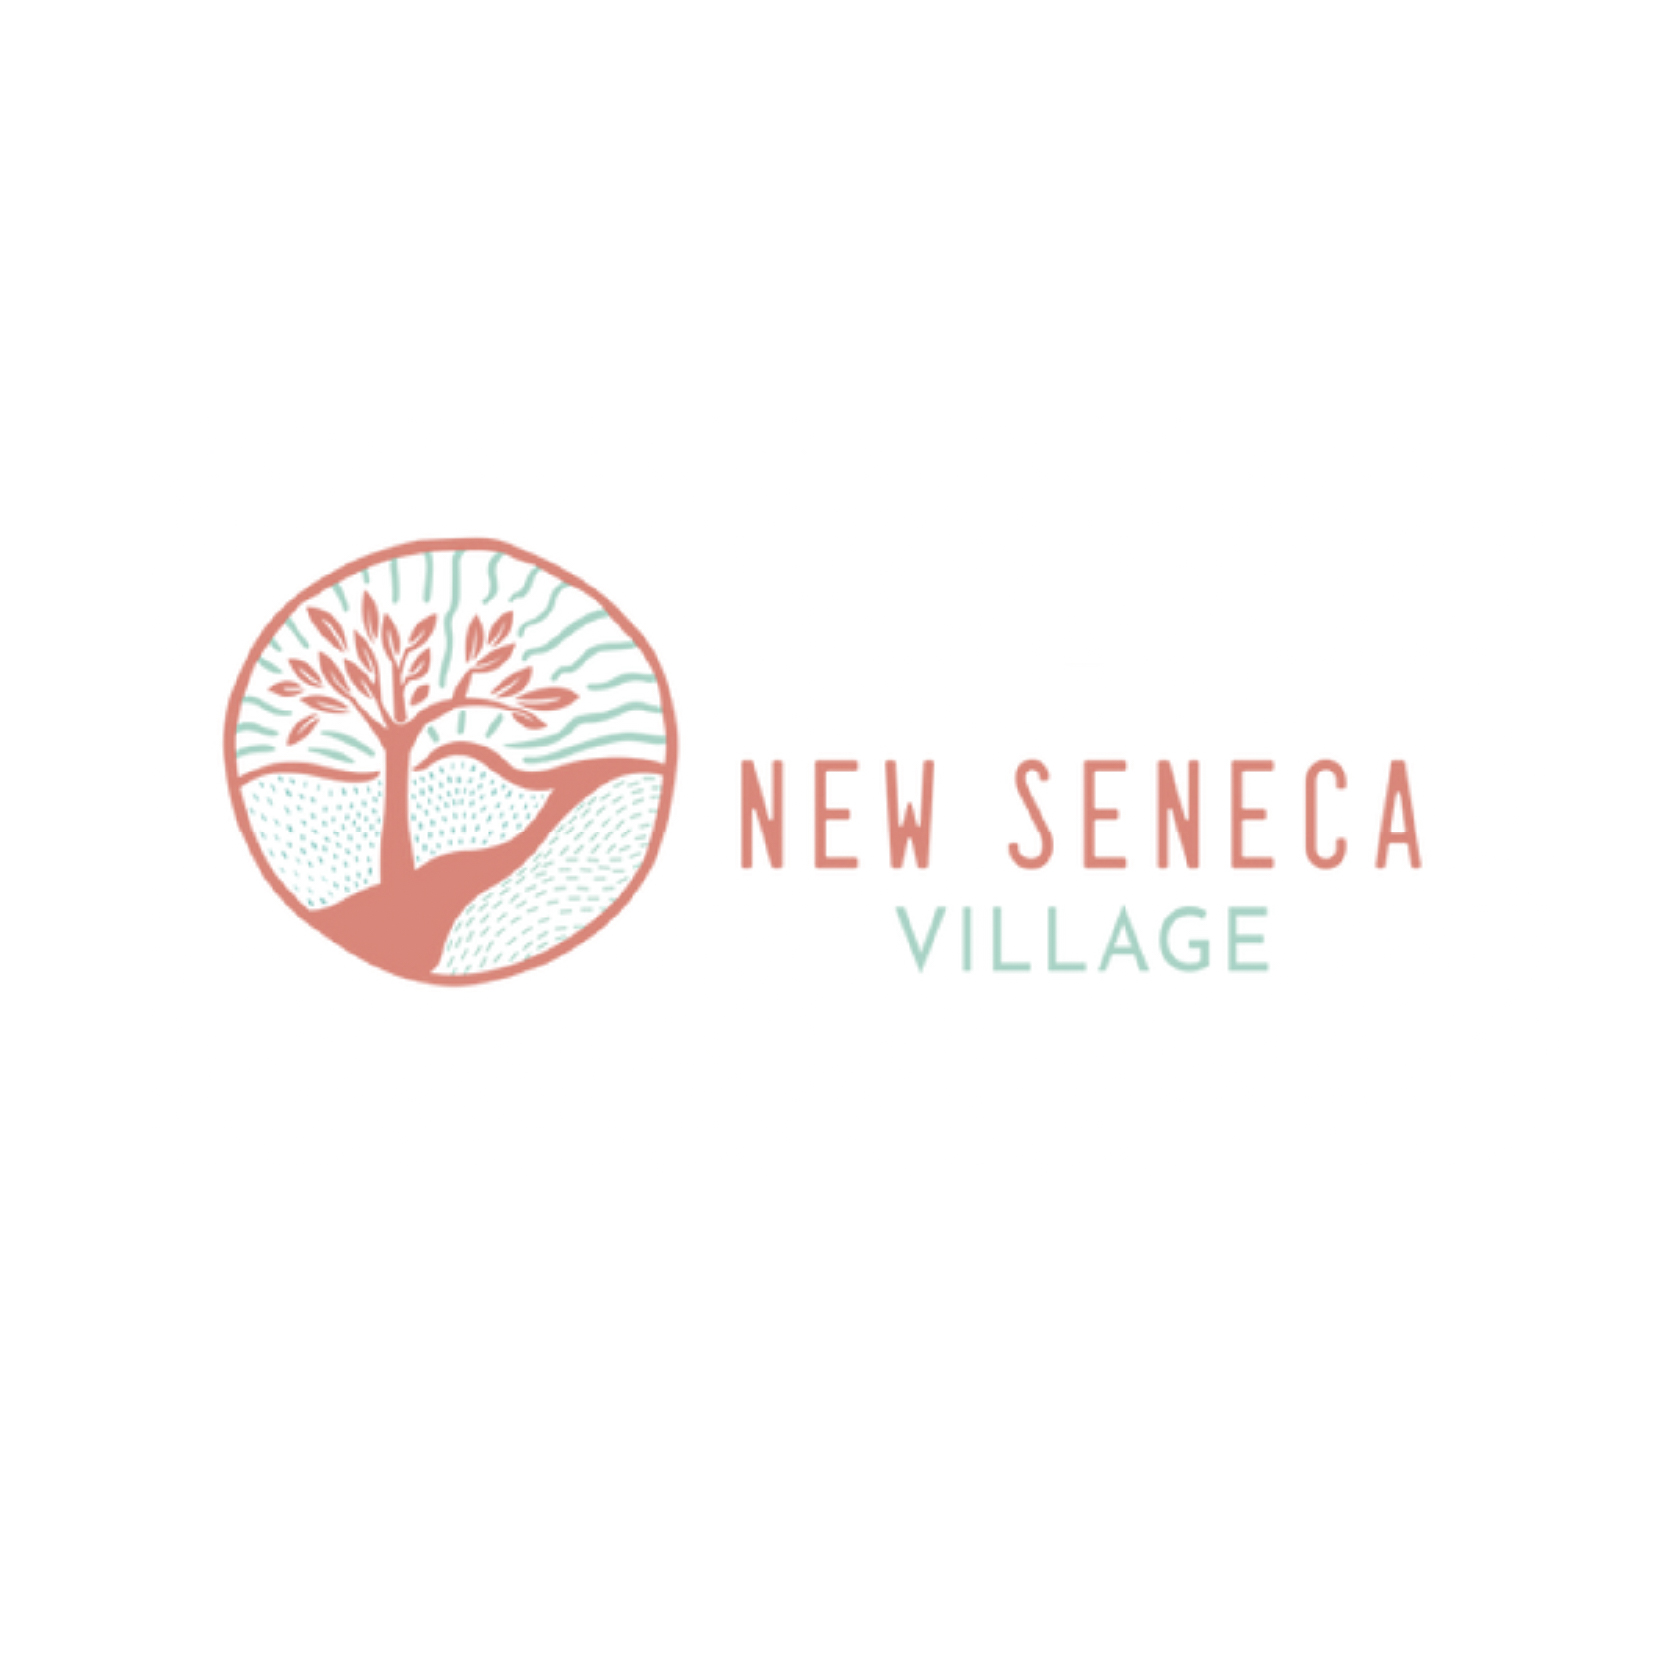 New Seneca Village logo.